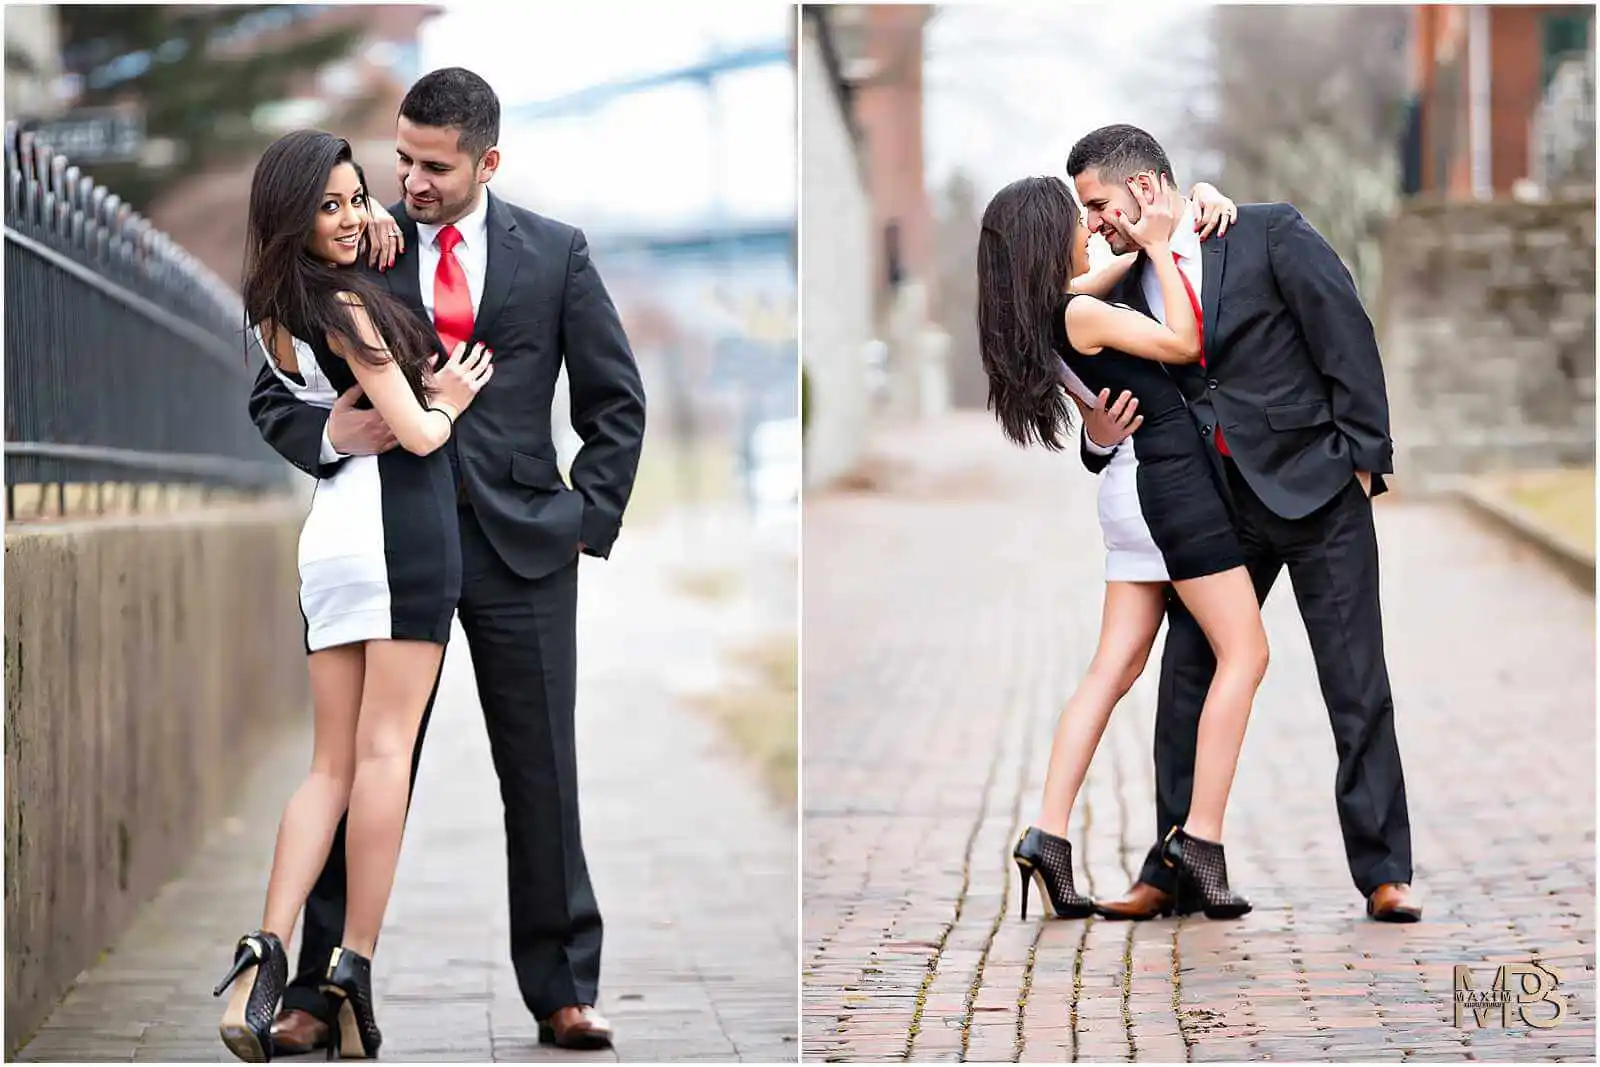 Stylish couple posing in a chic urban engagement photoshoot.